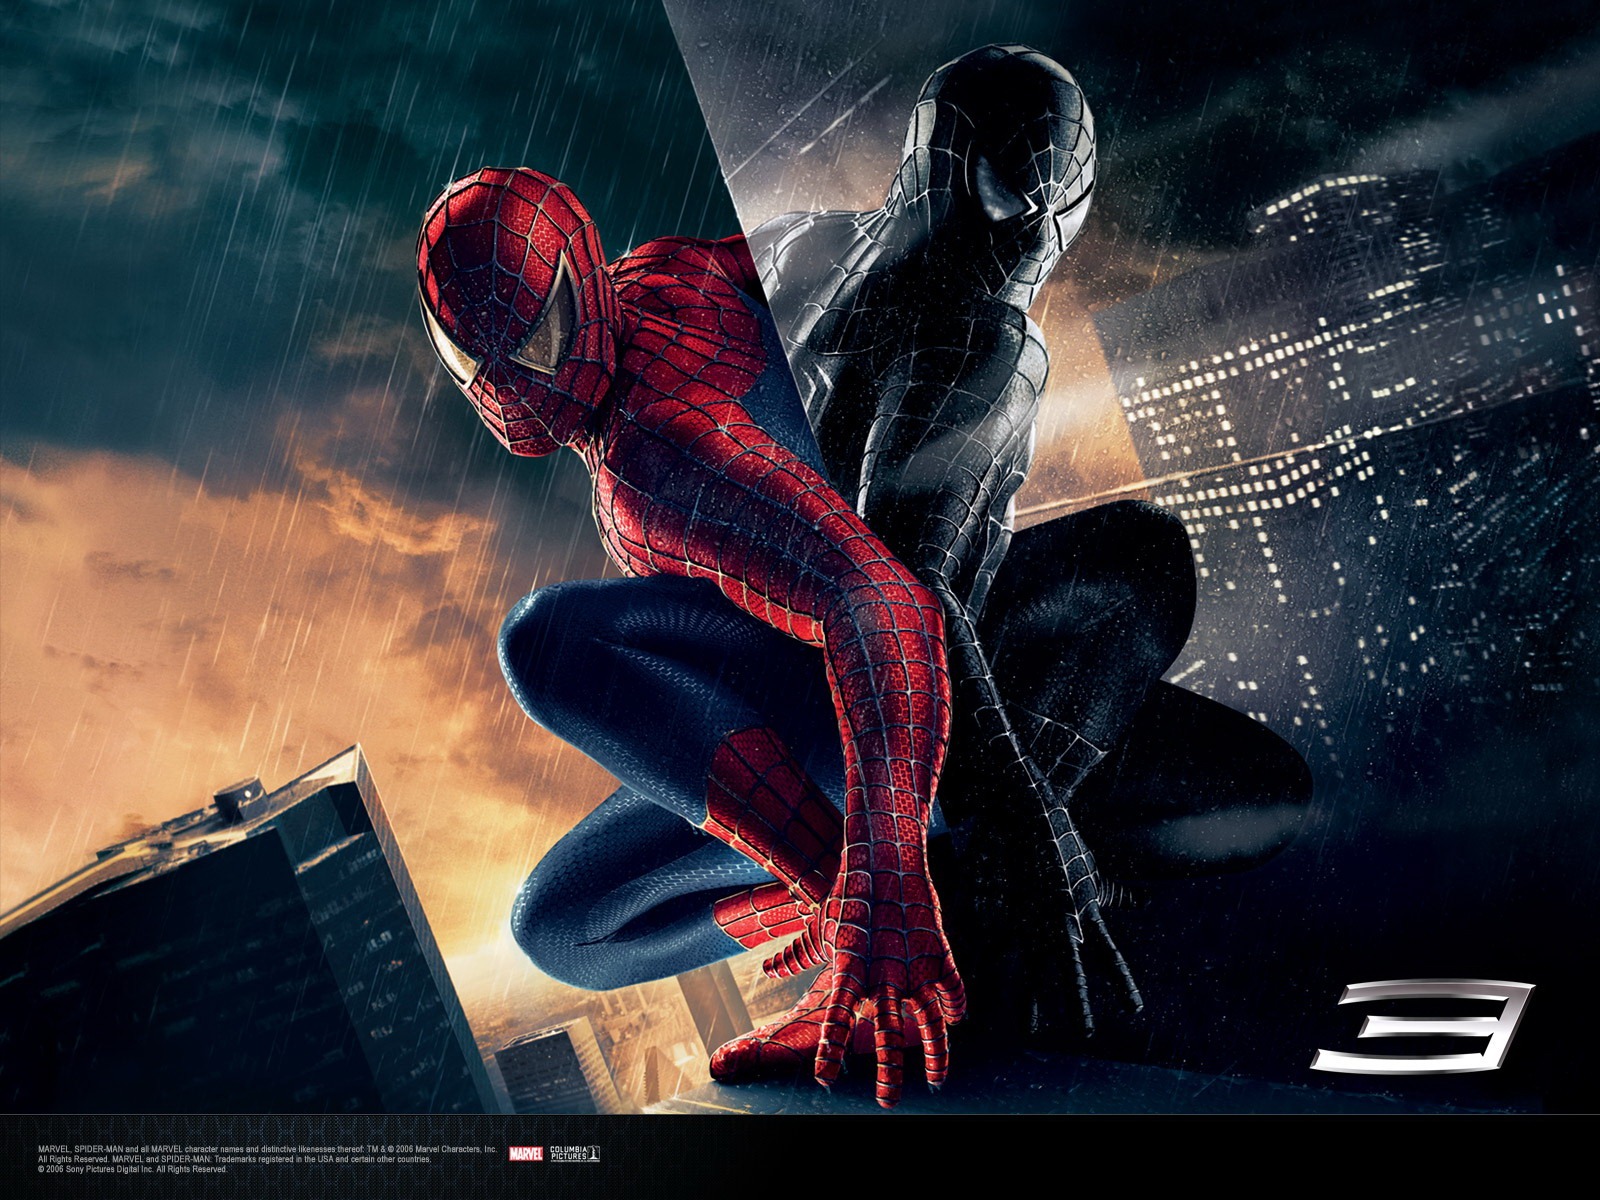 "Spider-Man 3" desktop wallpaper (1600 x 1200 pixels)